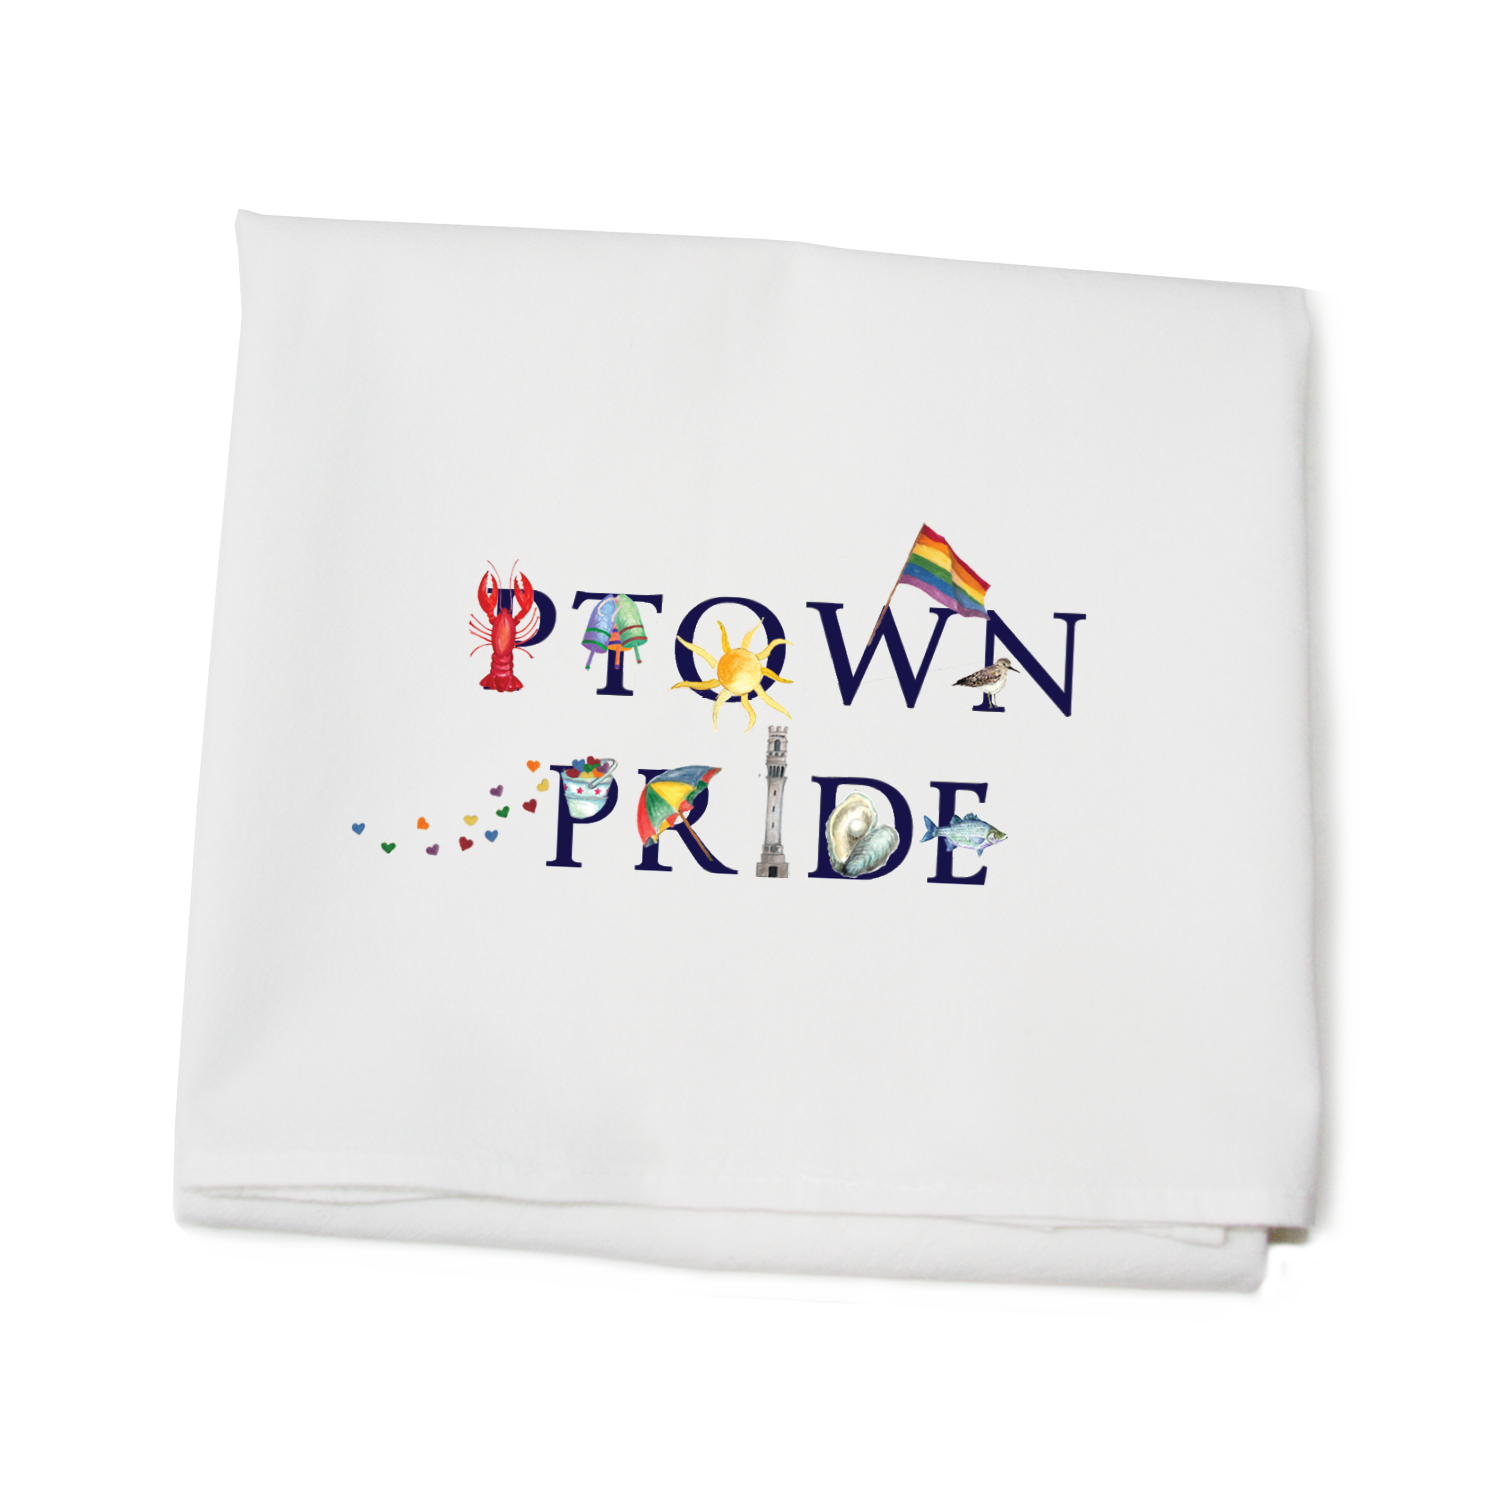 ptown pride flour sack towel